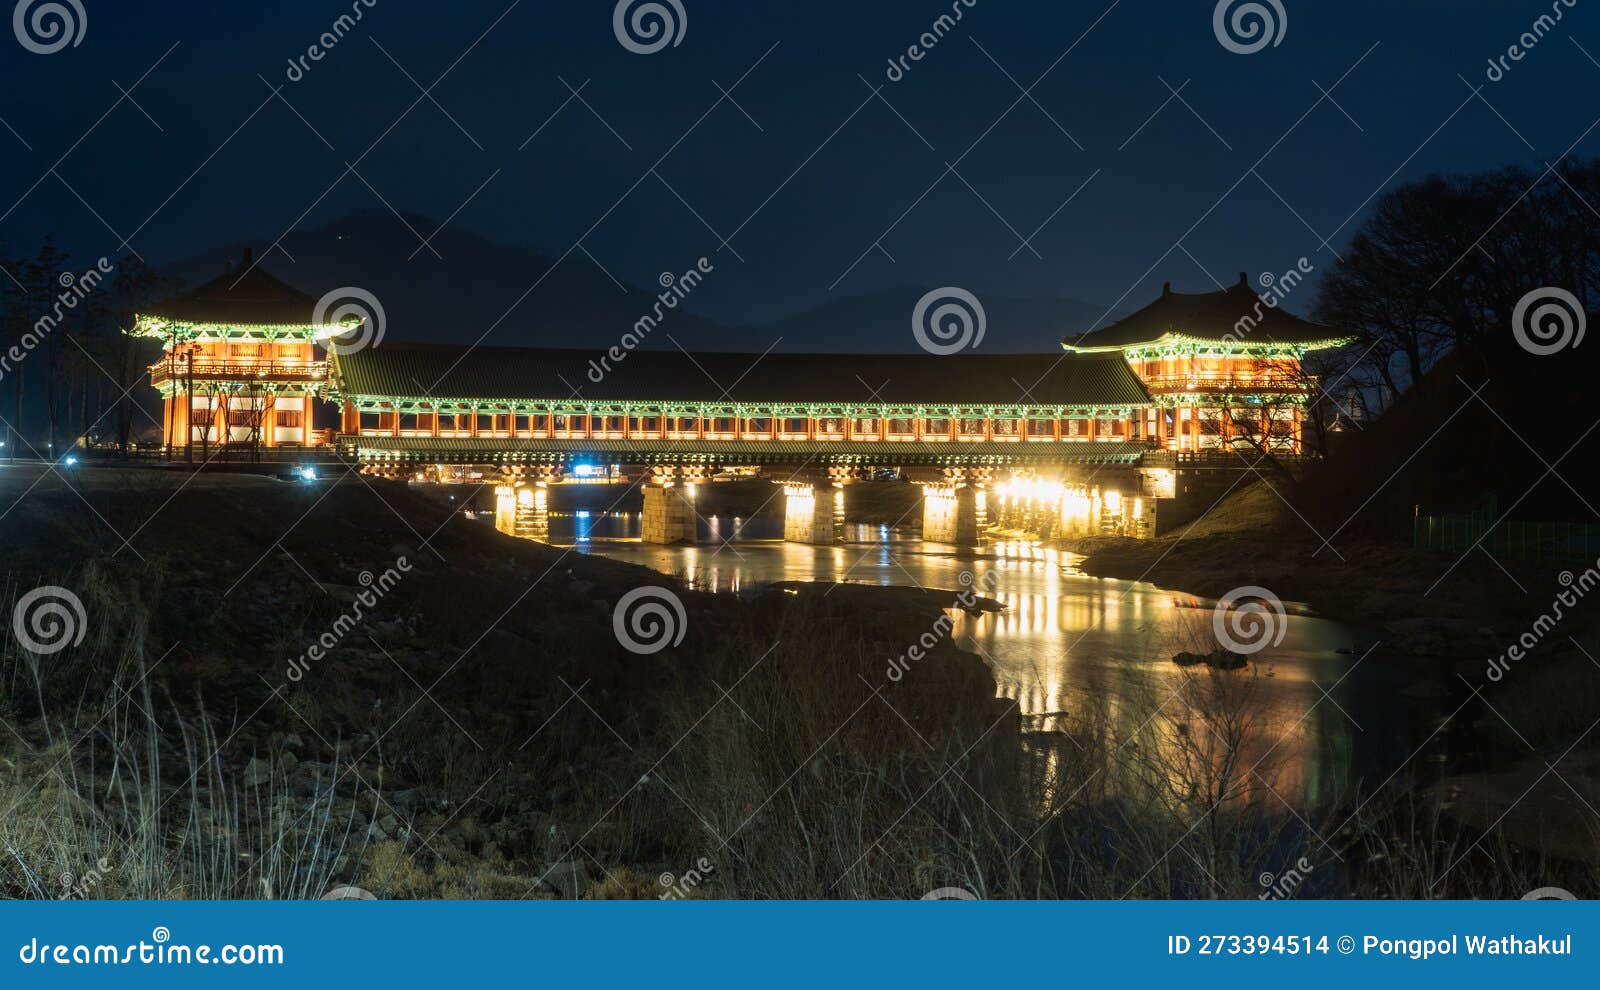 woljeong bridge next to gyochon traditional village during winter evening and night at gyeongju , south korea : 10 february 2023